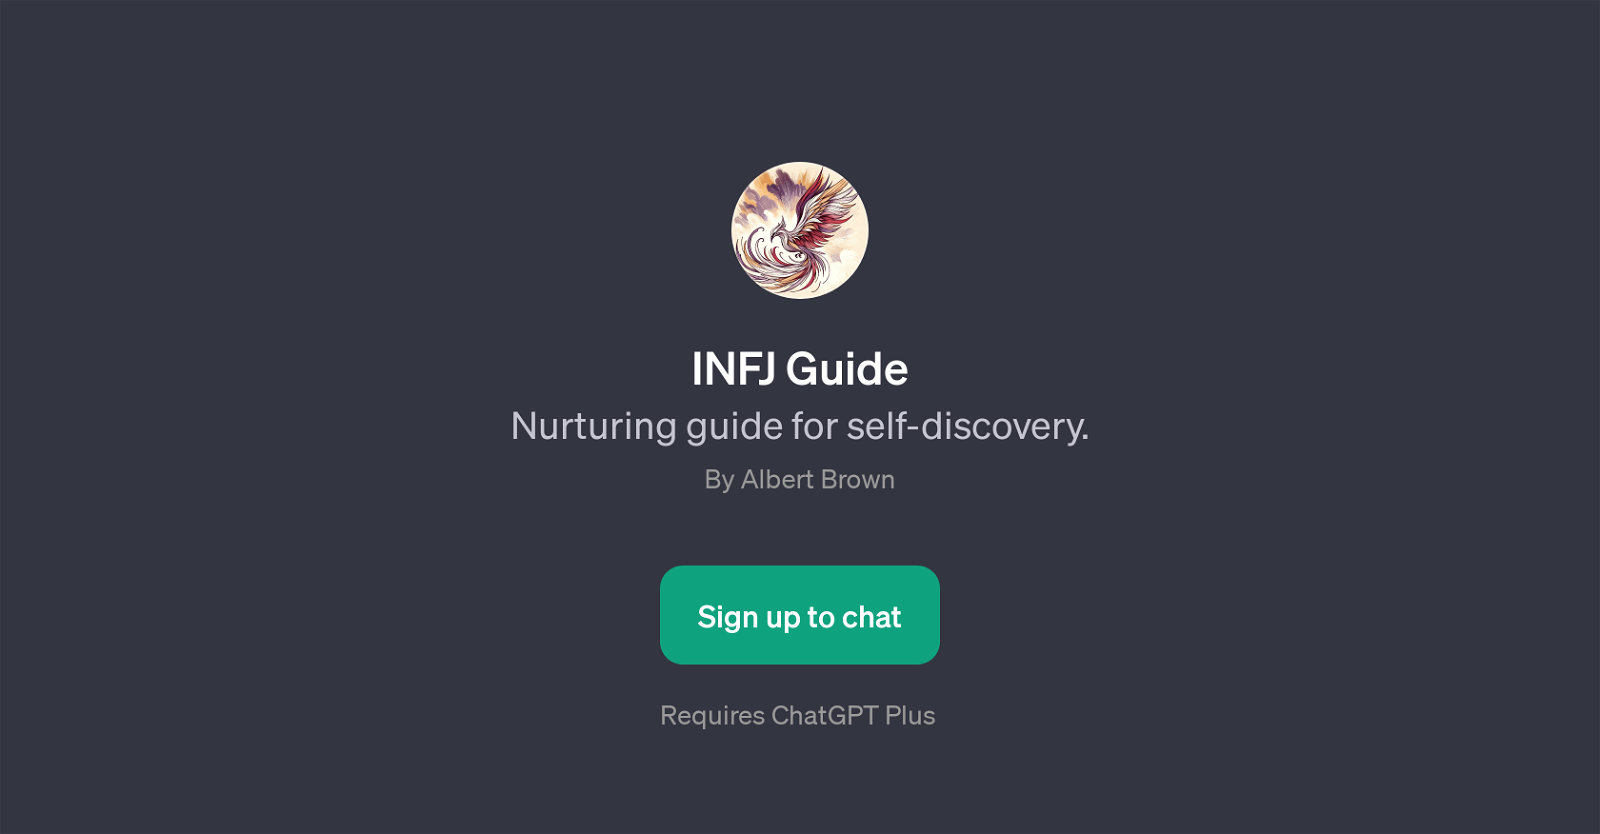 INFJ Guide website